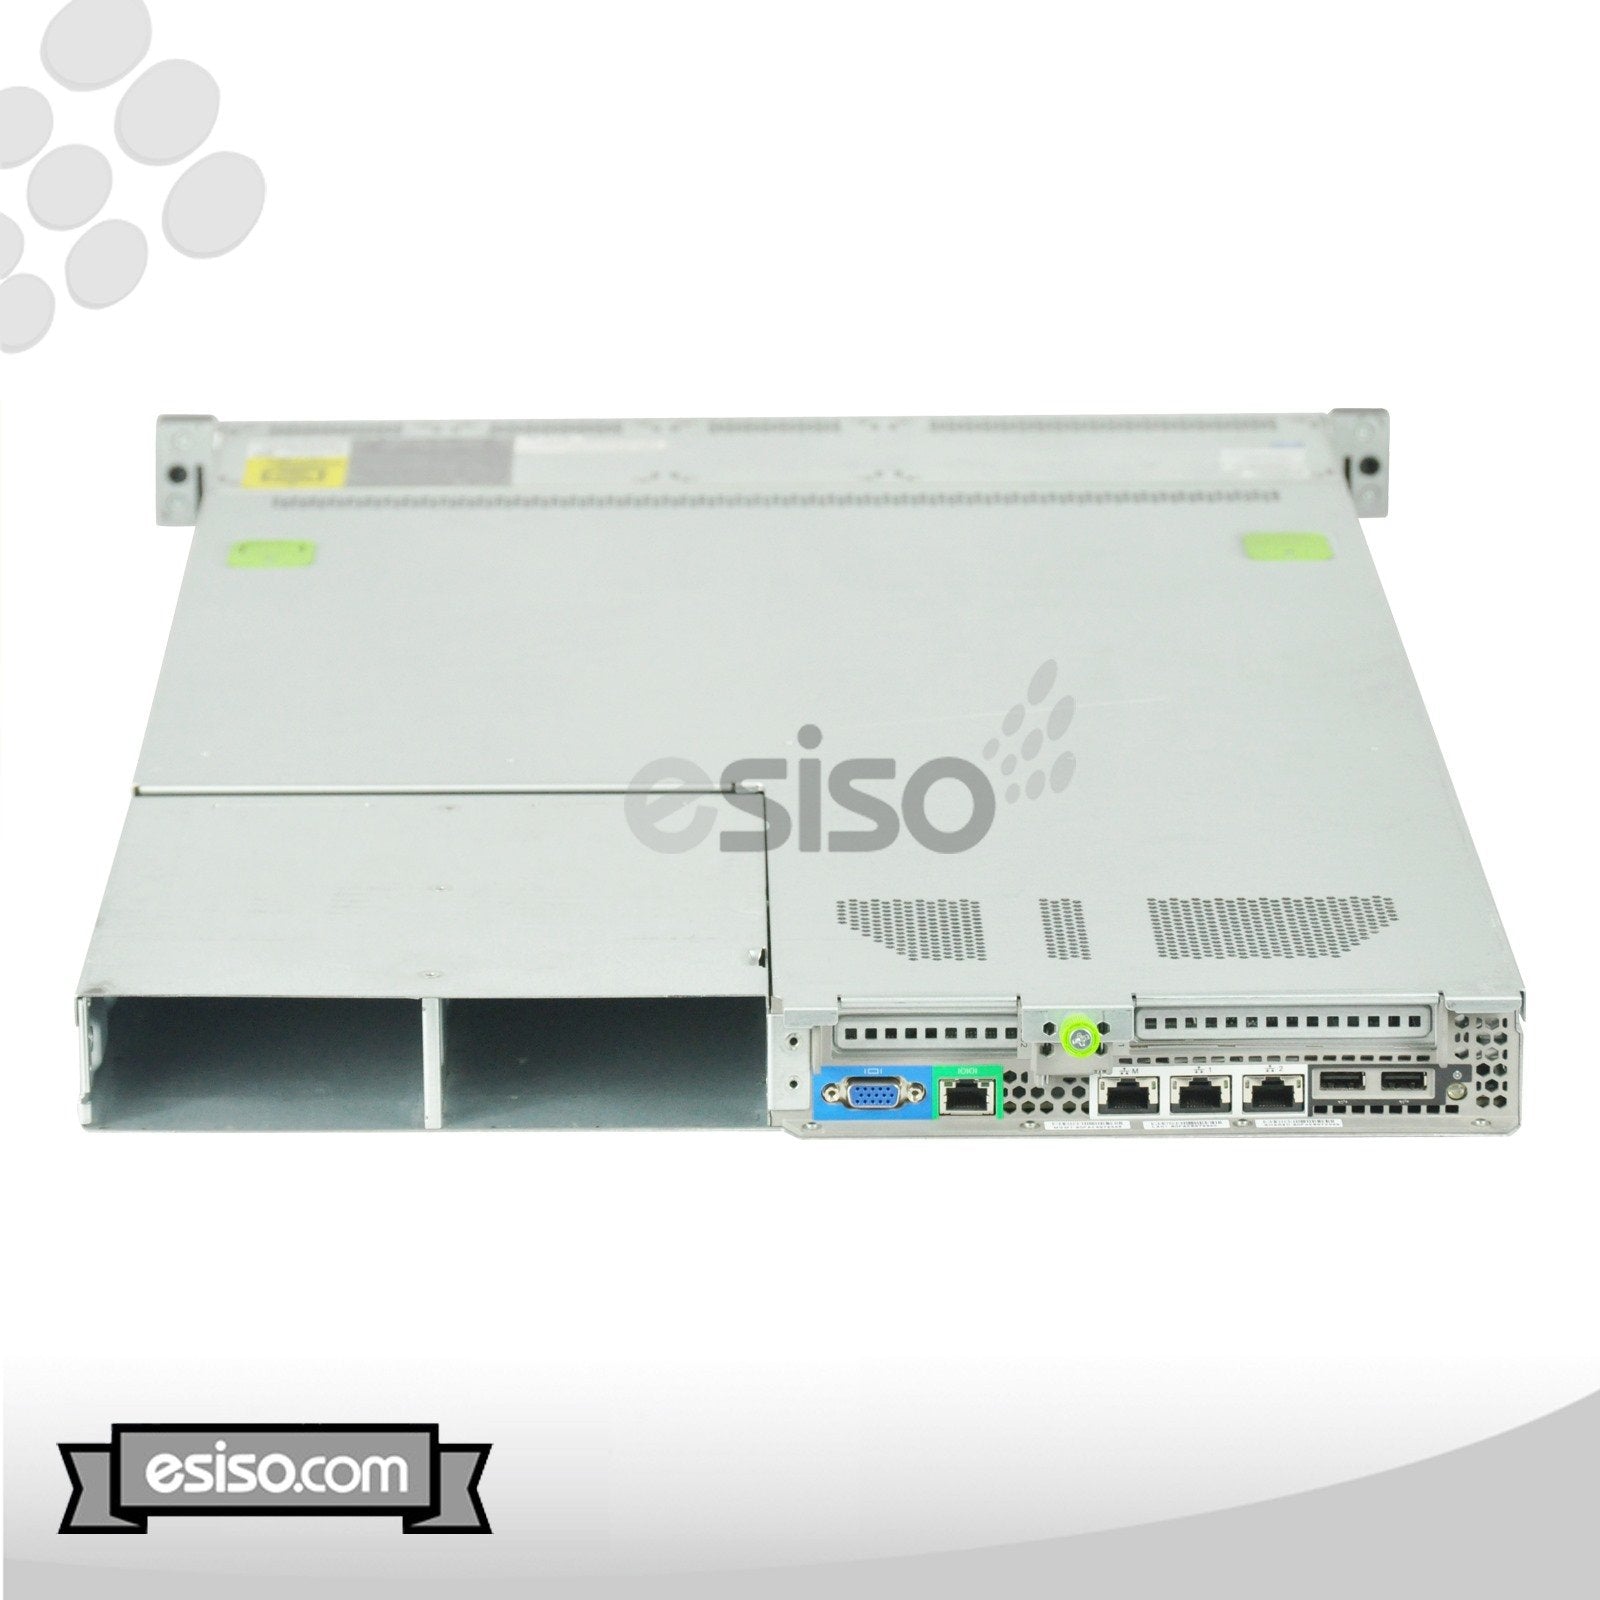 CISCO UCS C220 M3 SFF SERVER 2x 6 CORE E5-2630Lv2 2.4GHz 16GB RAM 8x 1TB SATA